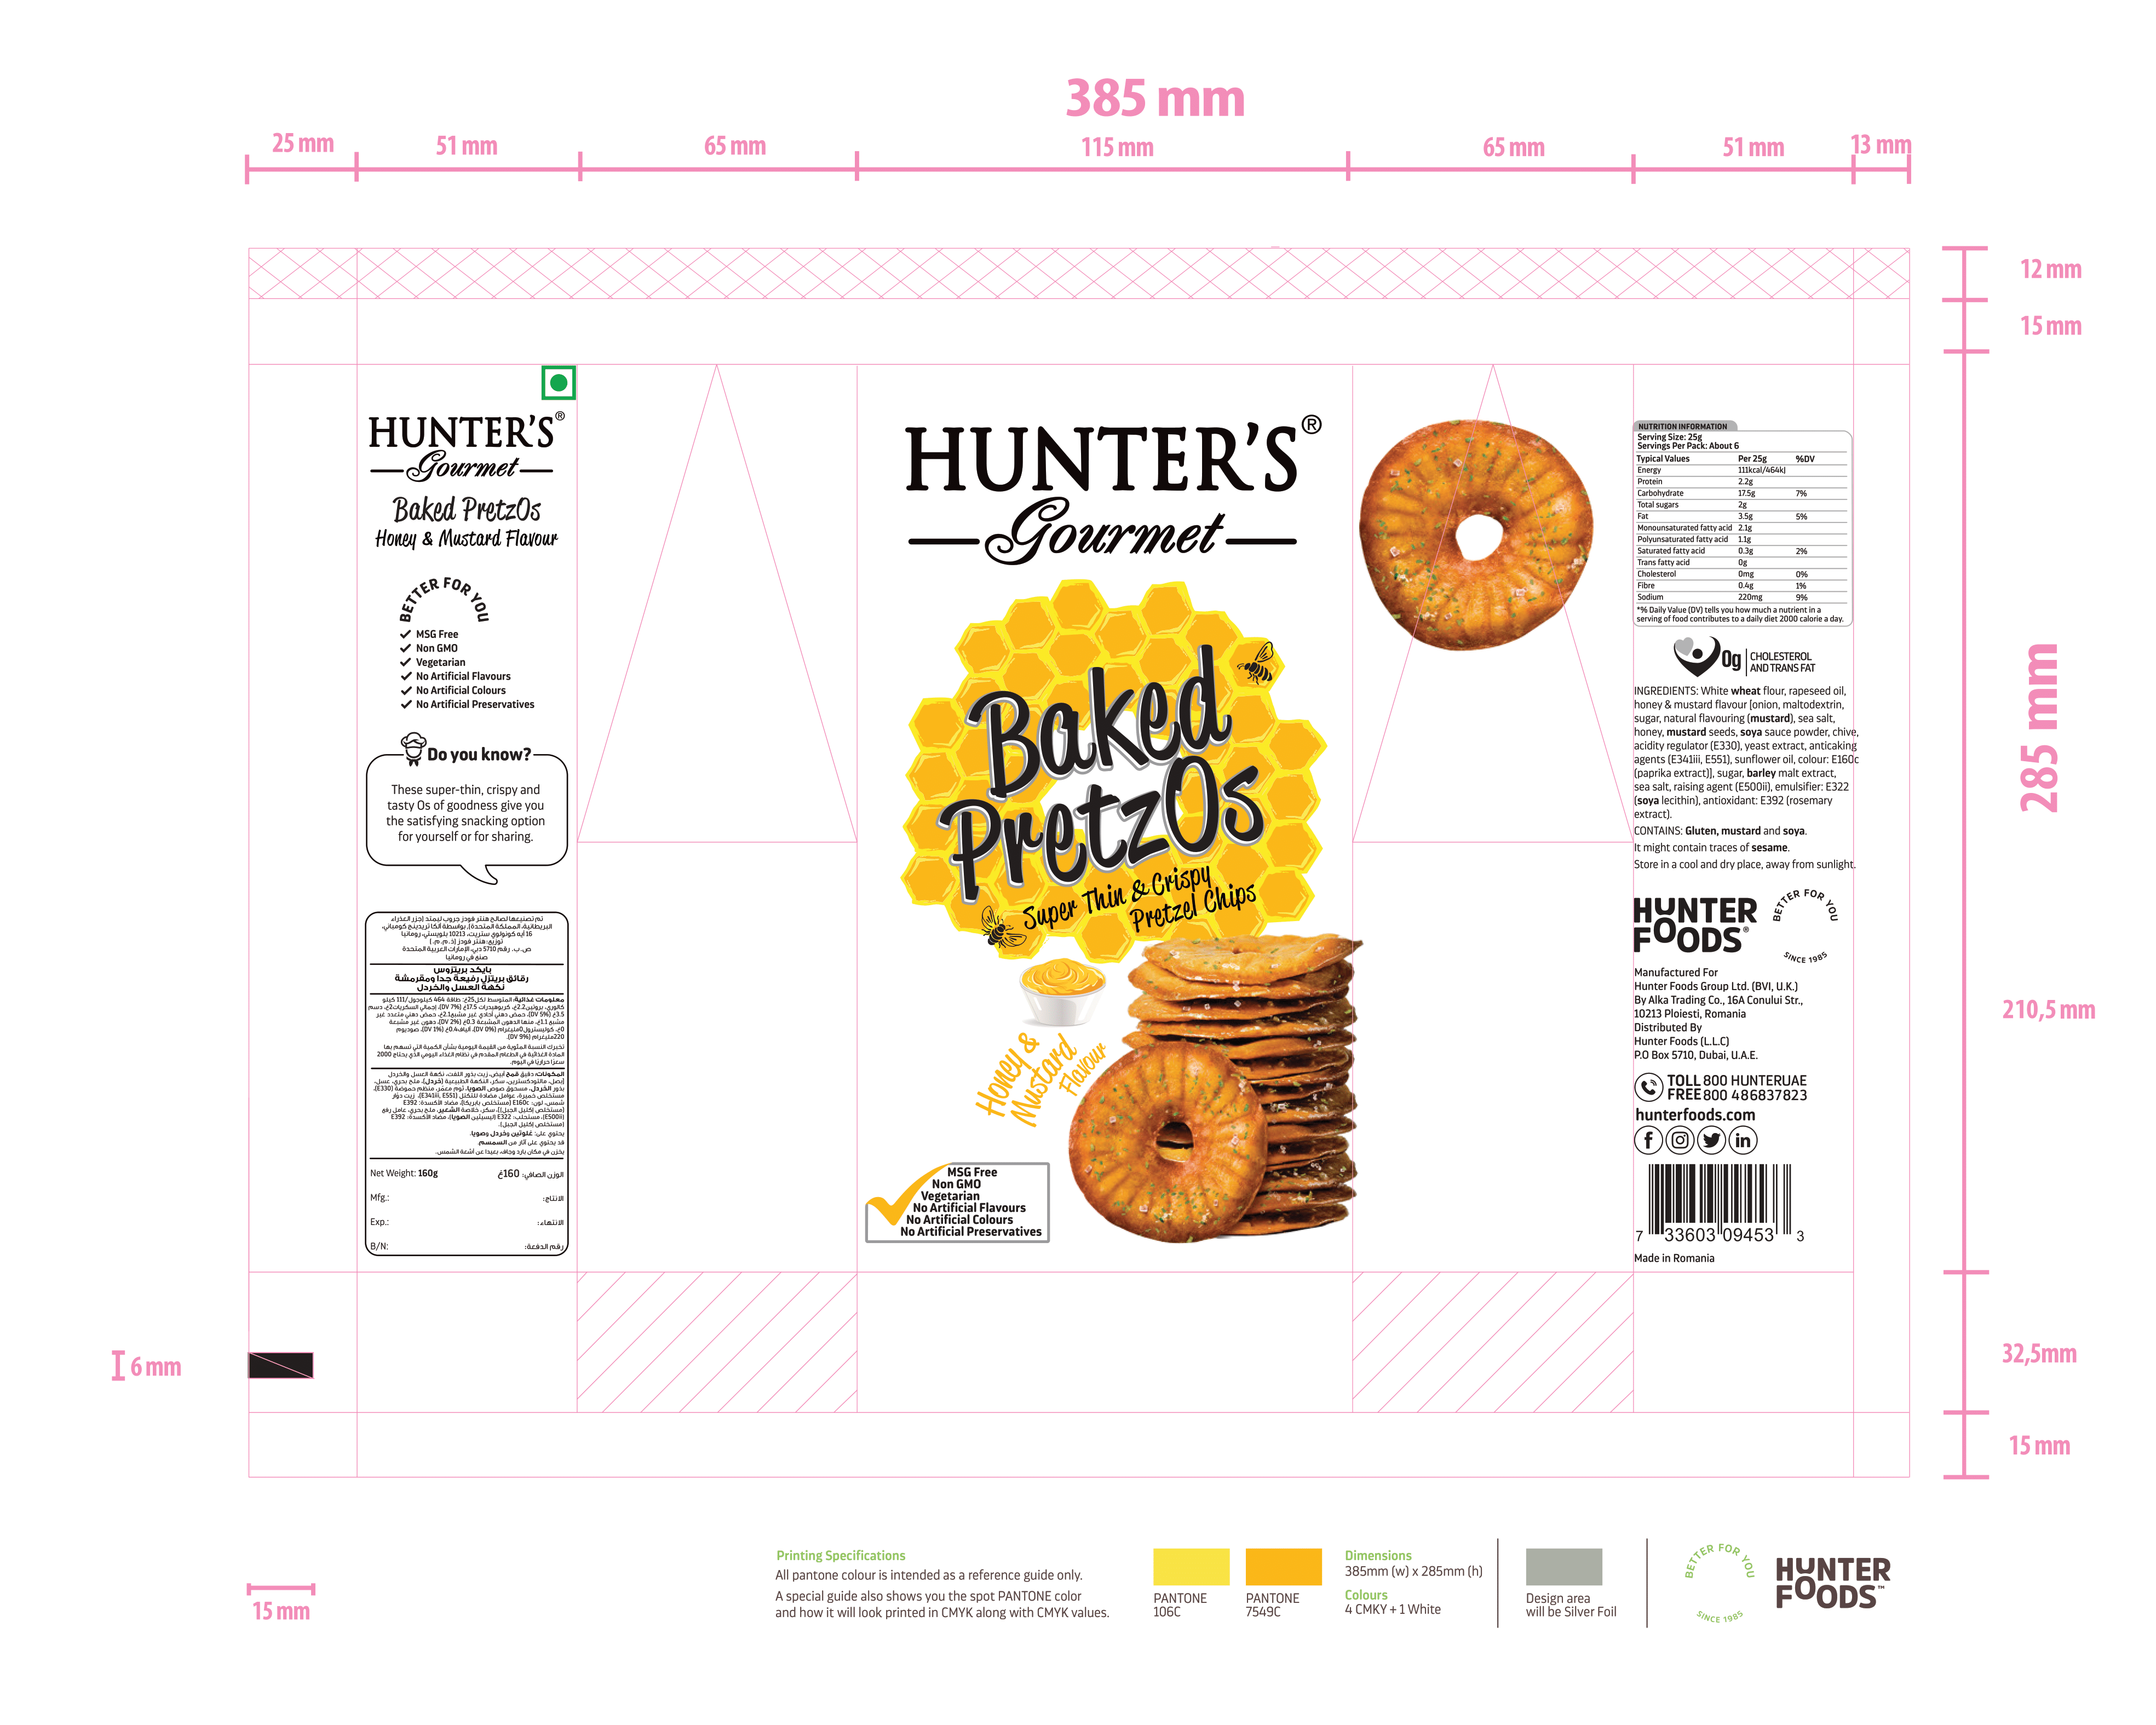 Hunter's Gourmet Baked Pretzos - Honey Mustard 12 units per case 160 g Product Label